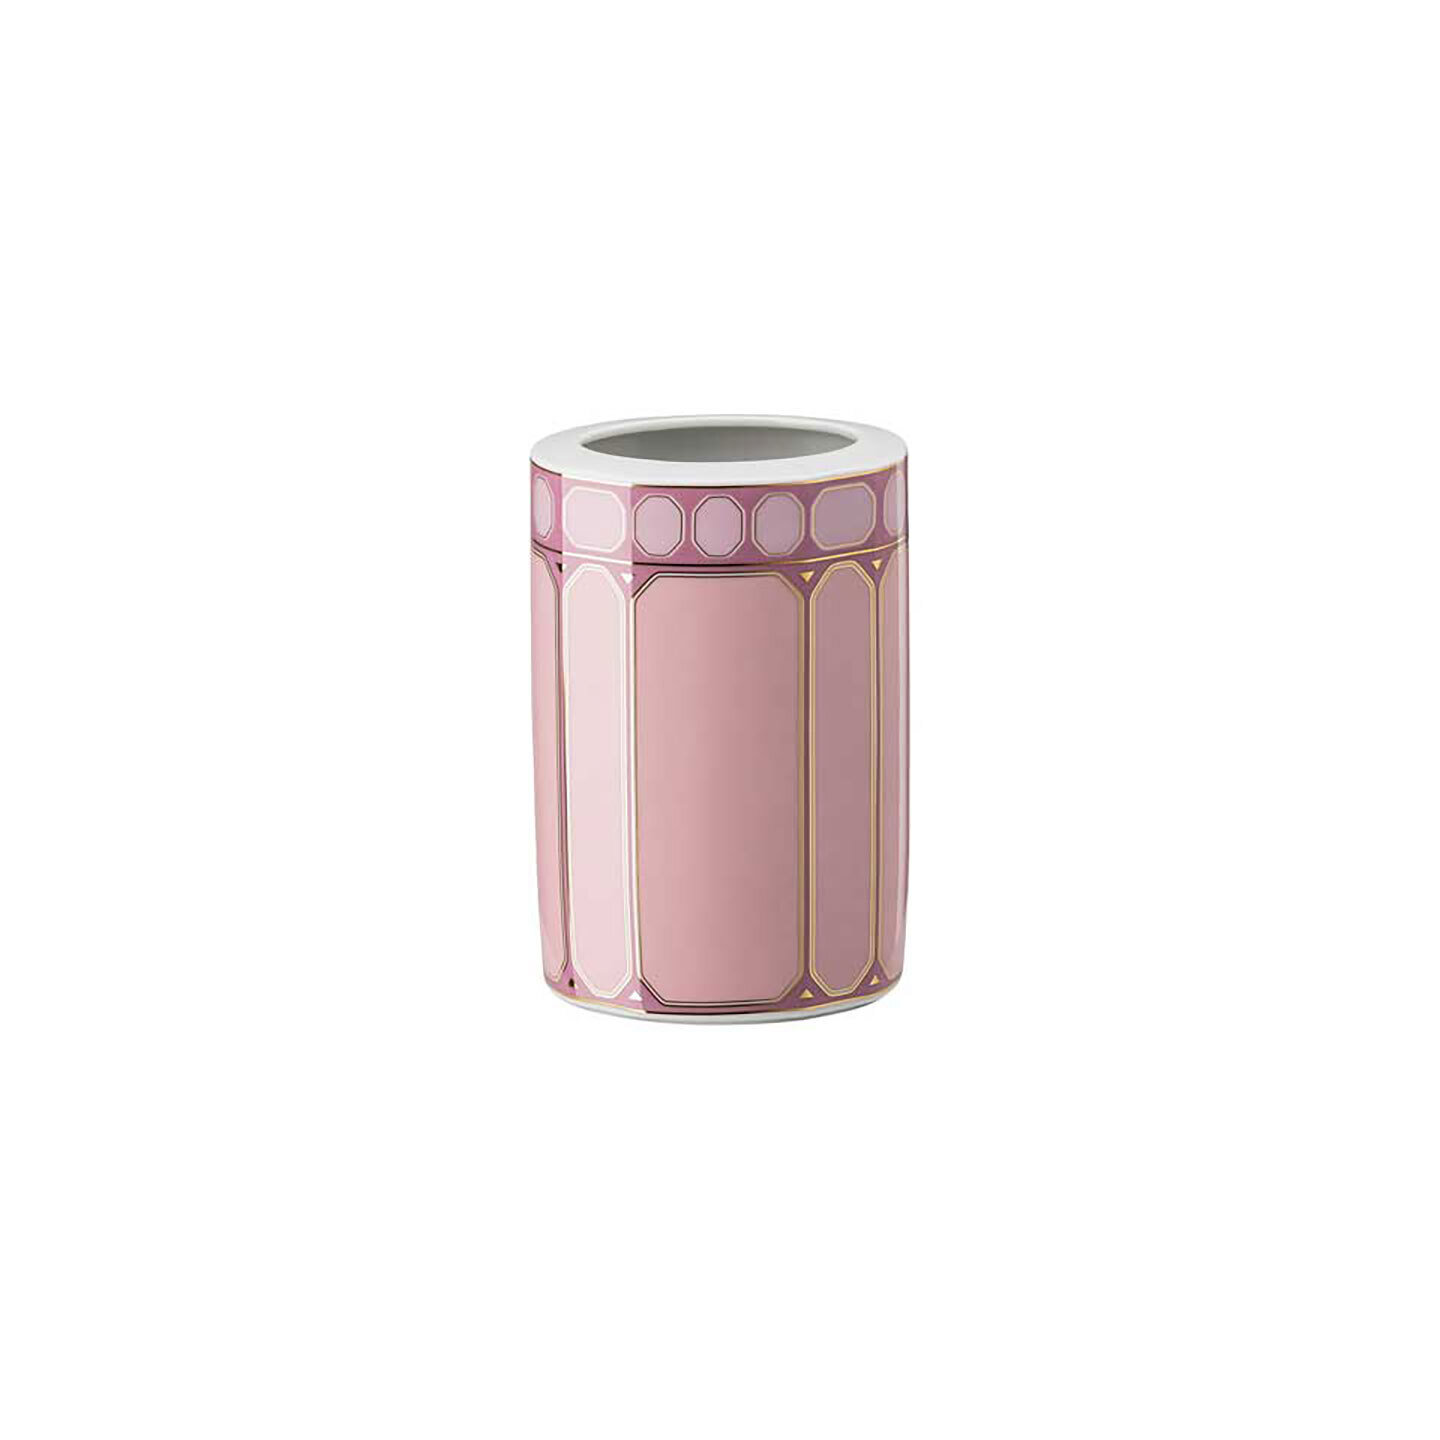 Rosenthal Swarovski Signum Vase 6 Inch Rose Pink 10570-426350-26015